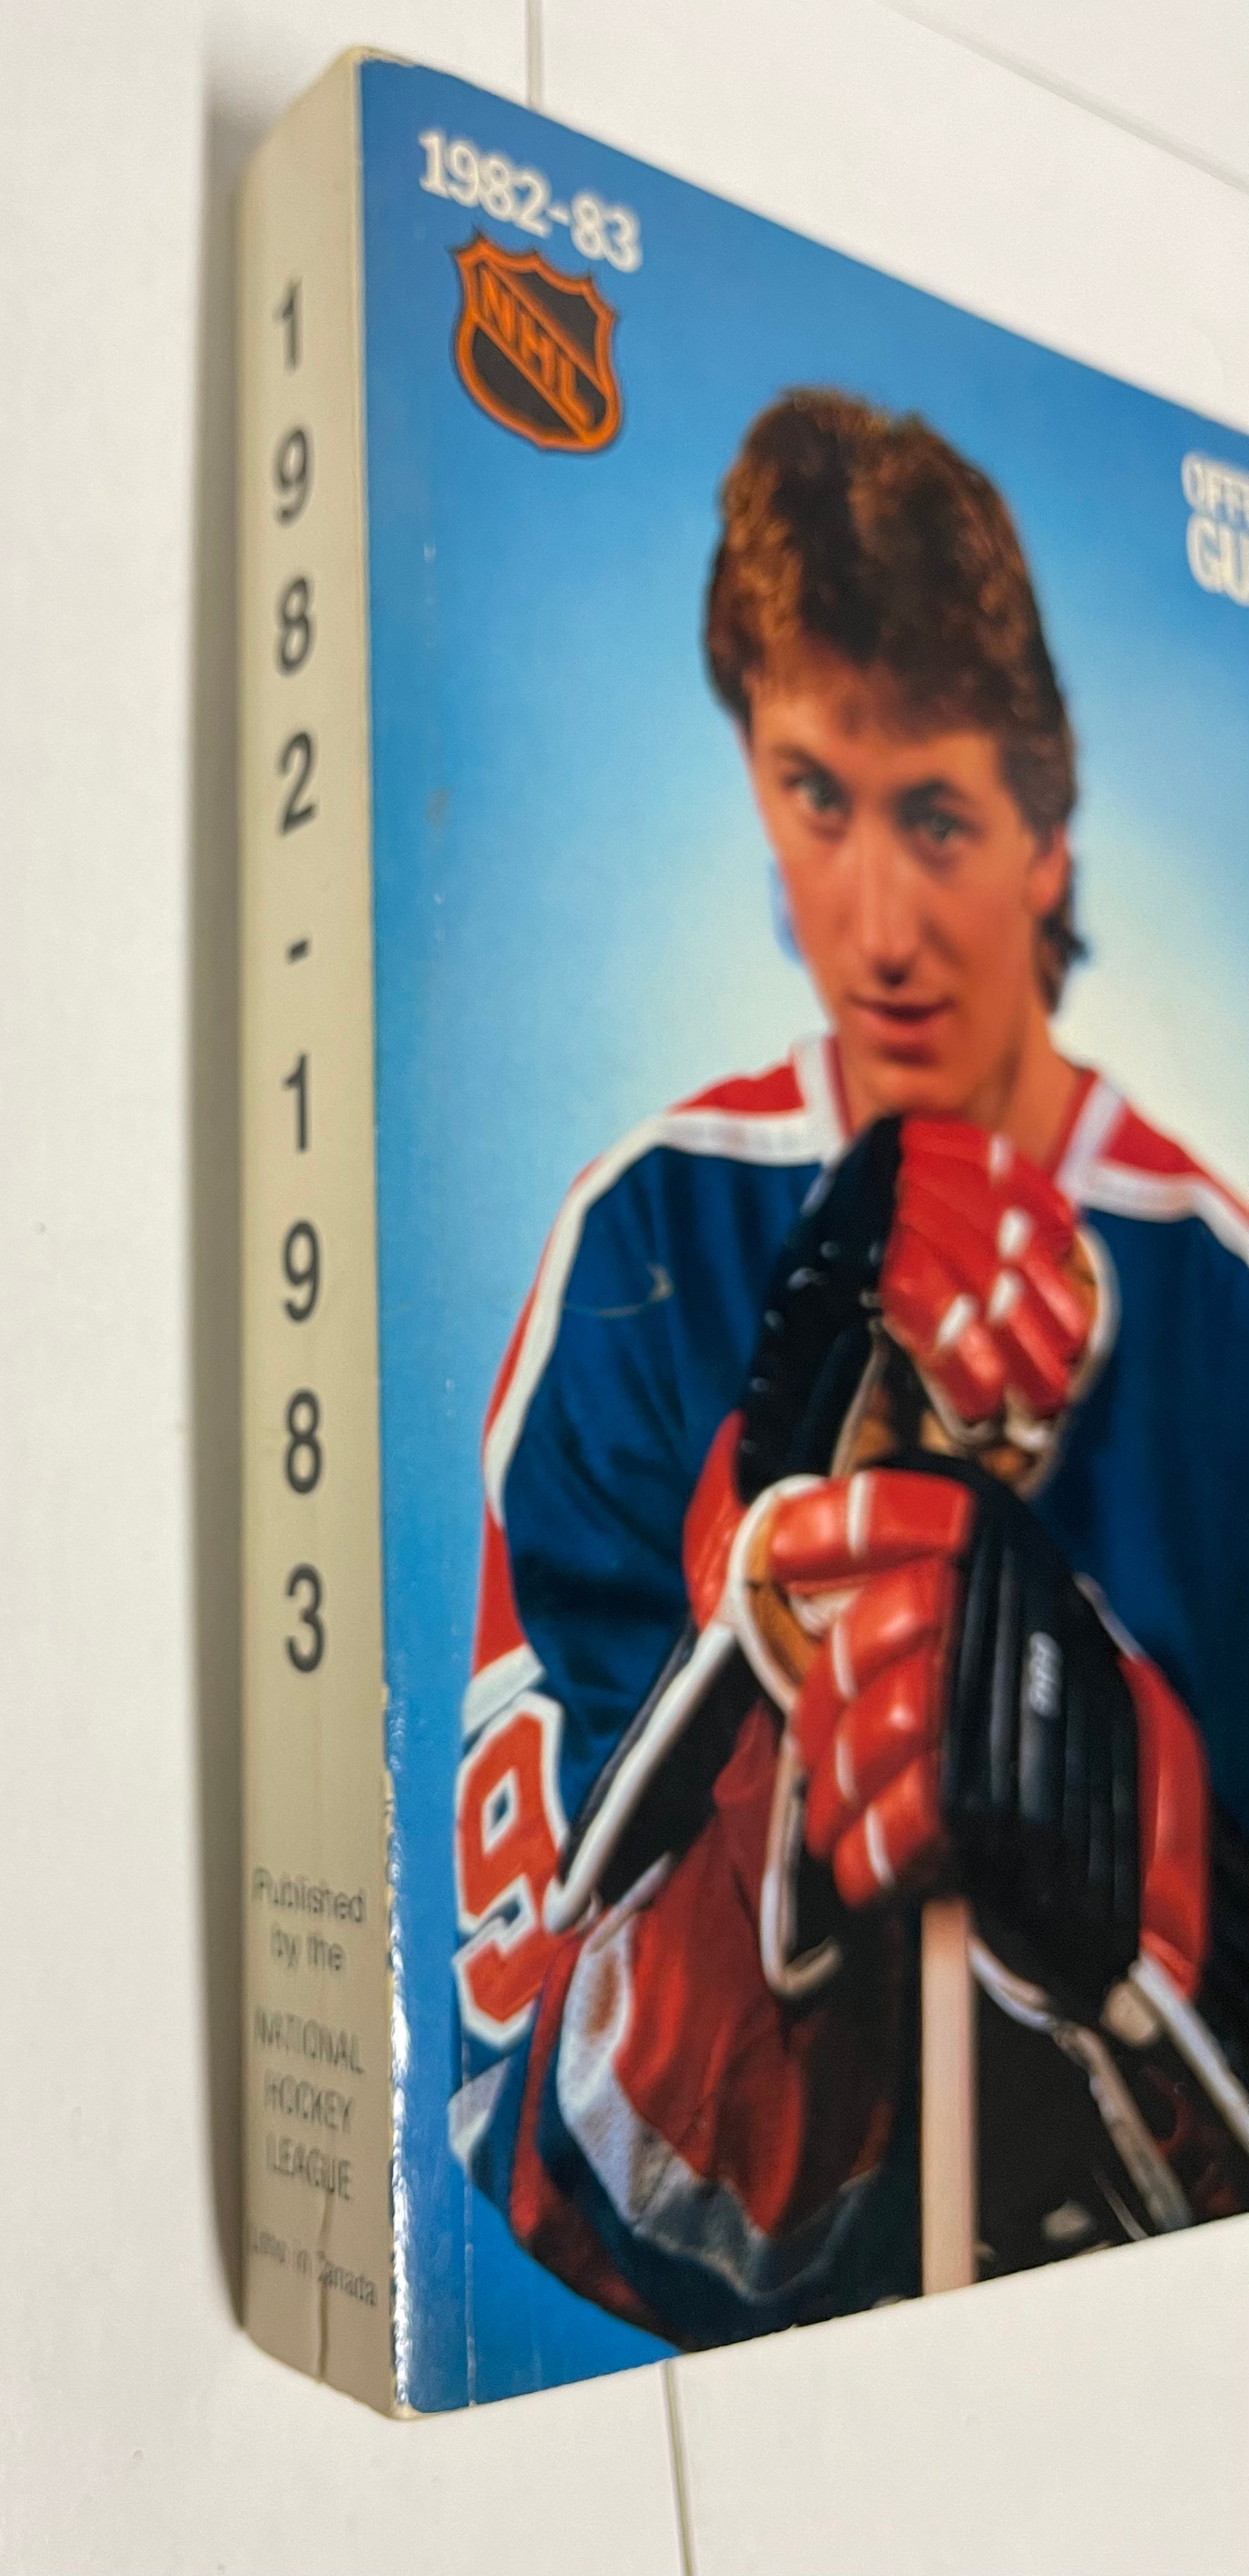 1982-83 NHL hockey Record thick book